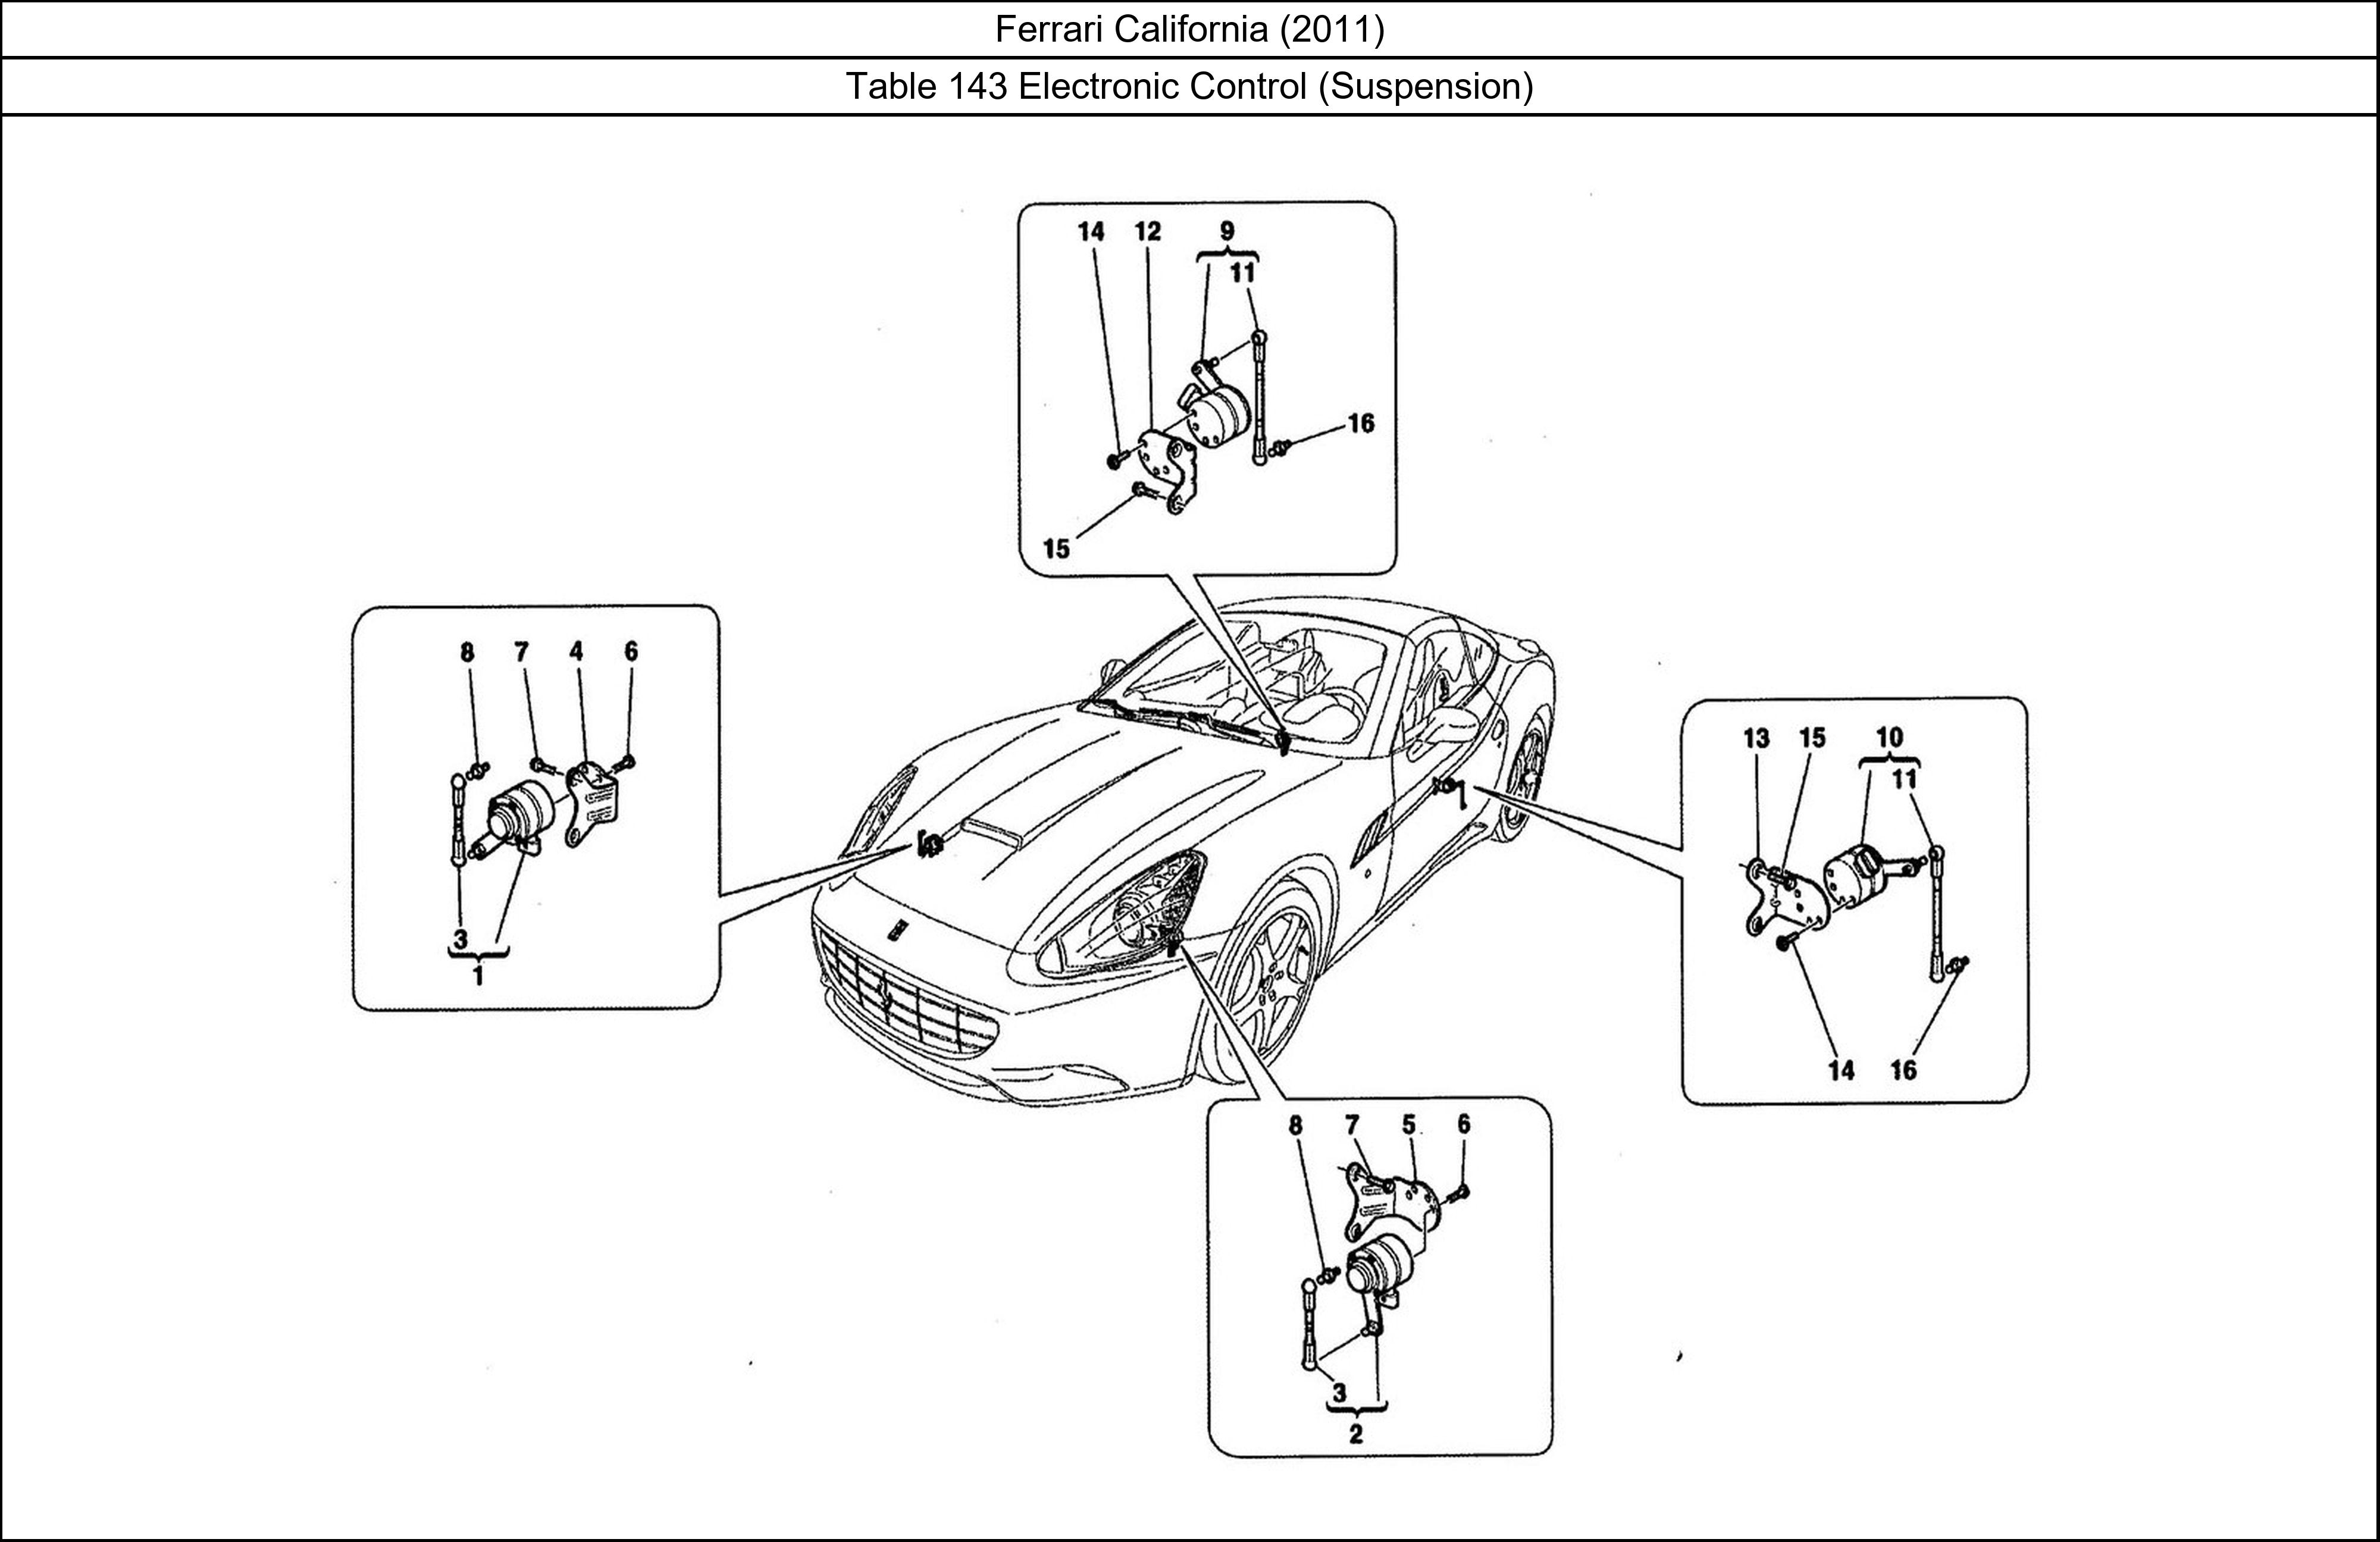 Ferrari Parts Ferrari California (2011) Table 143 Electronic Control (Suspension)